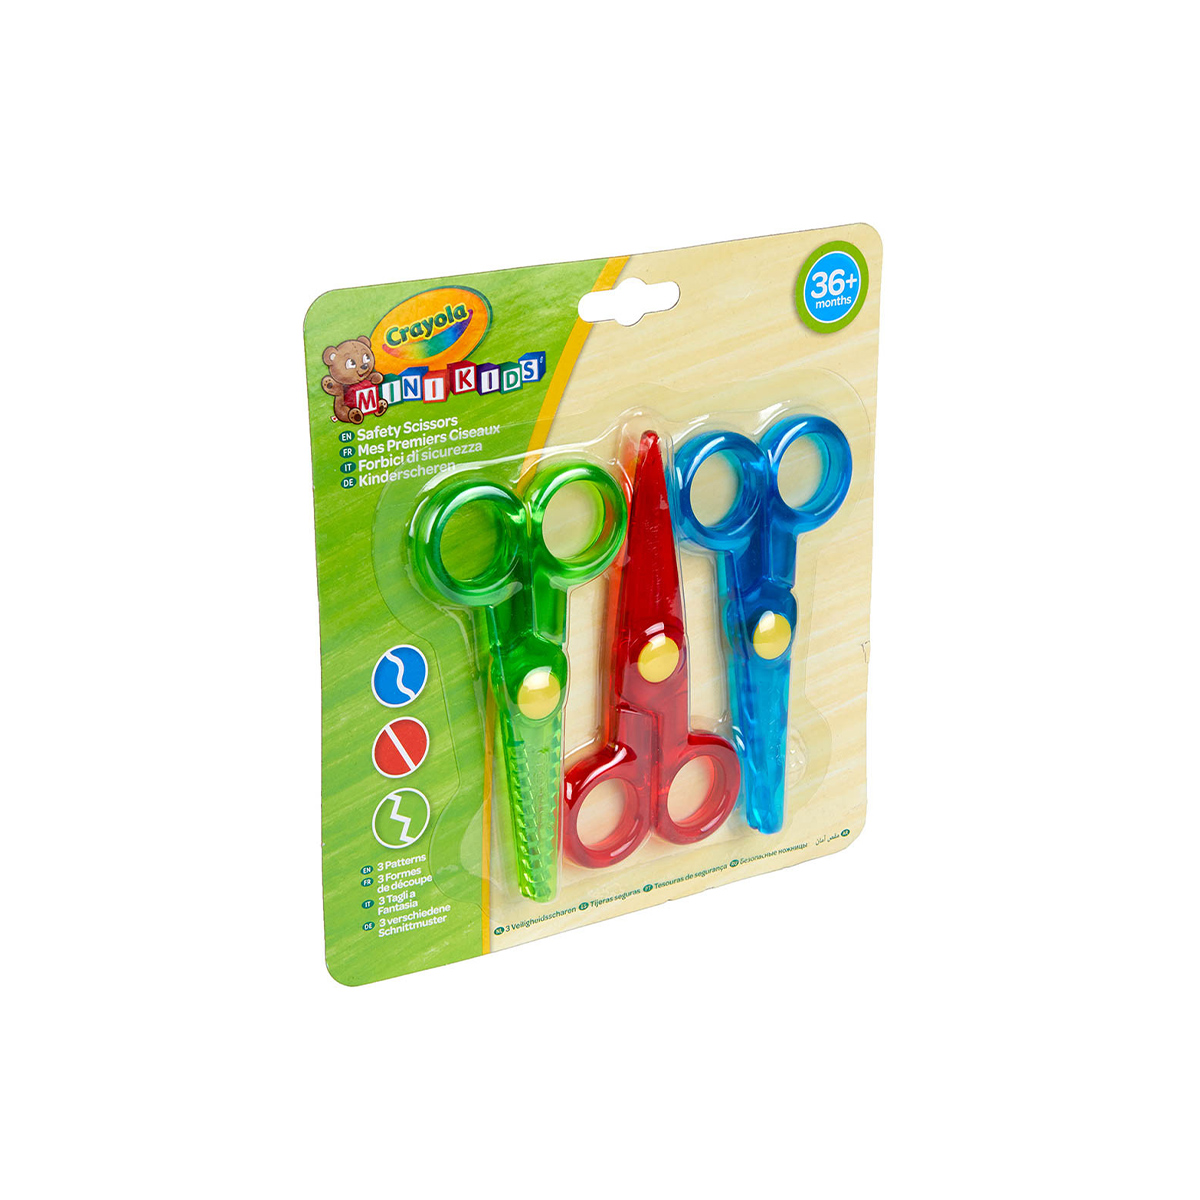 Pack of 3 scissors safety mini kids Crayola